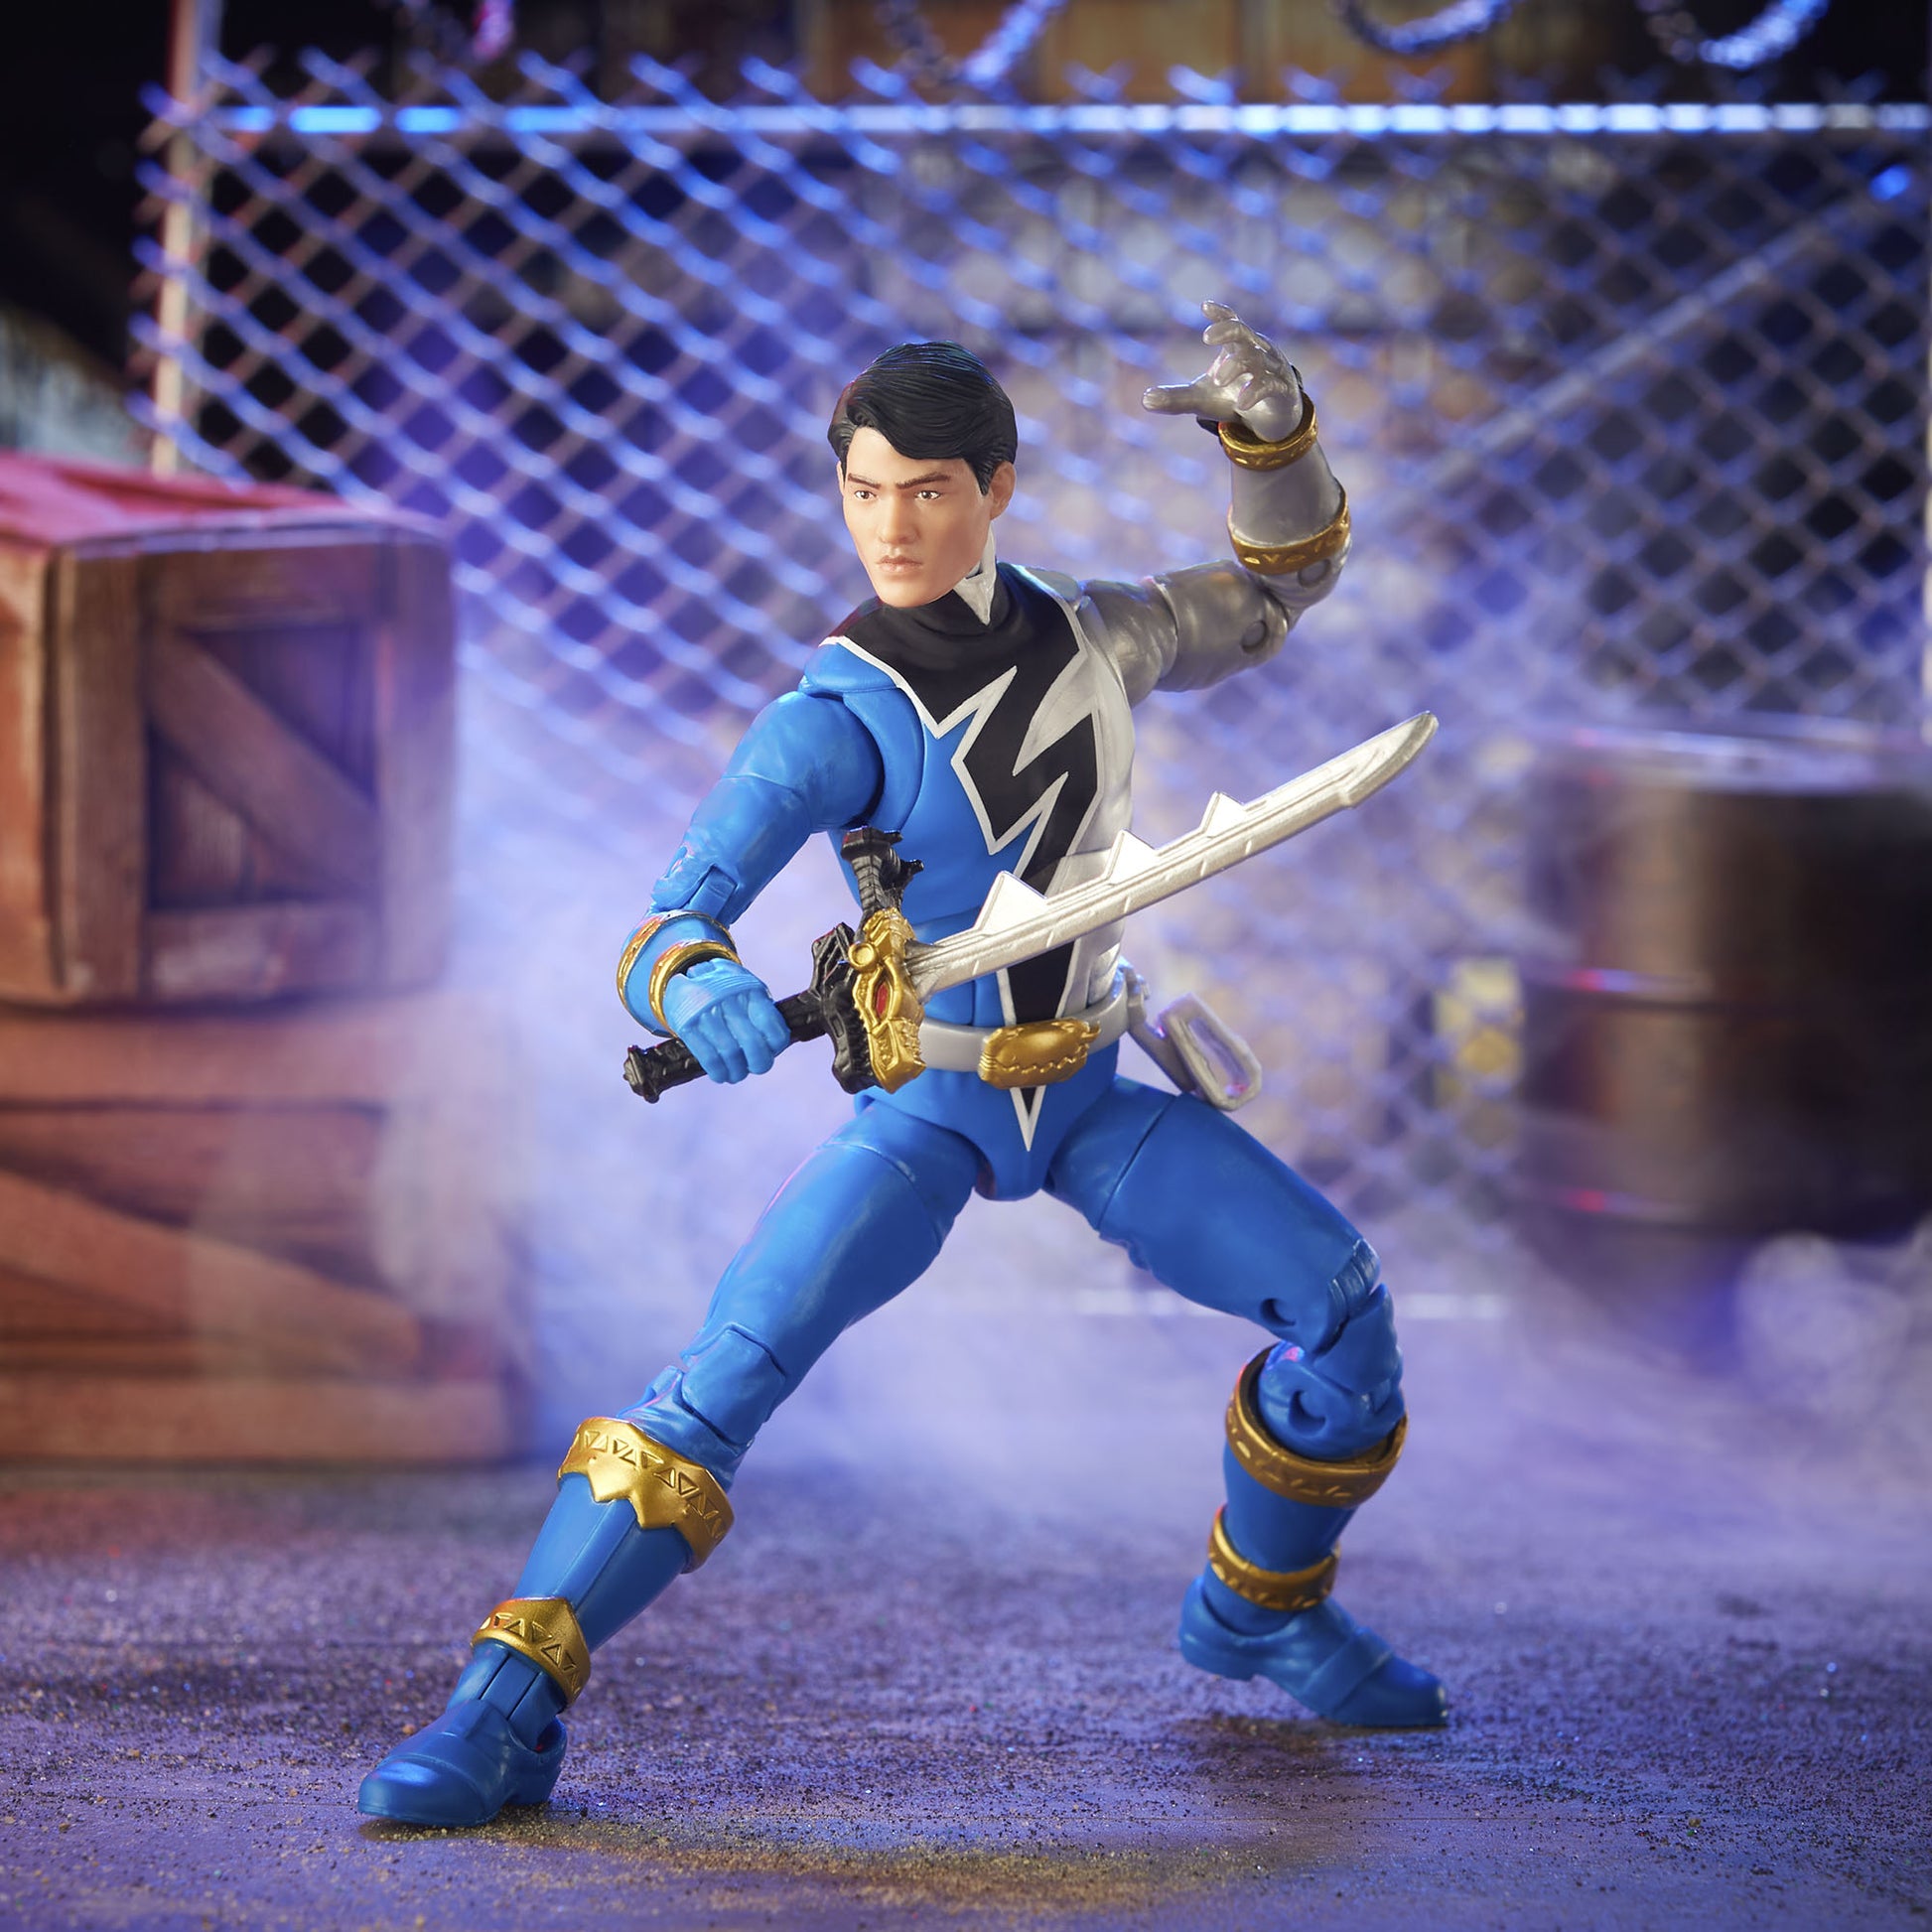 Power Rangers Lightning Collection Dino Fury Blue Ranger Figure attack pose - Heretoserveyou